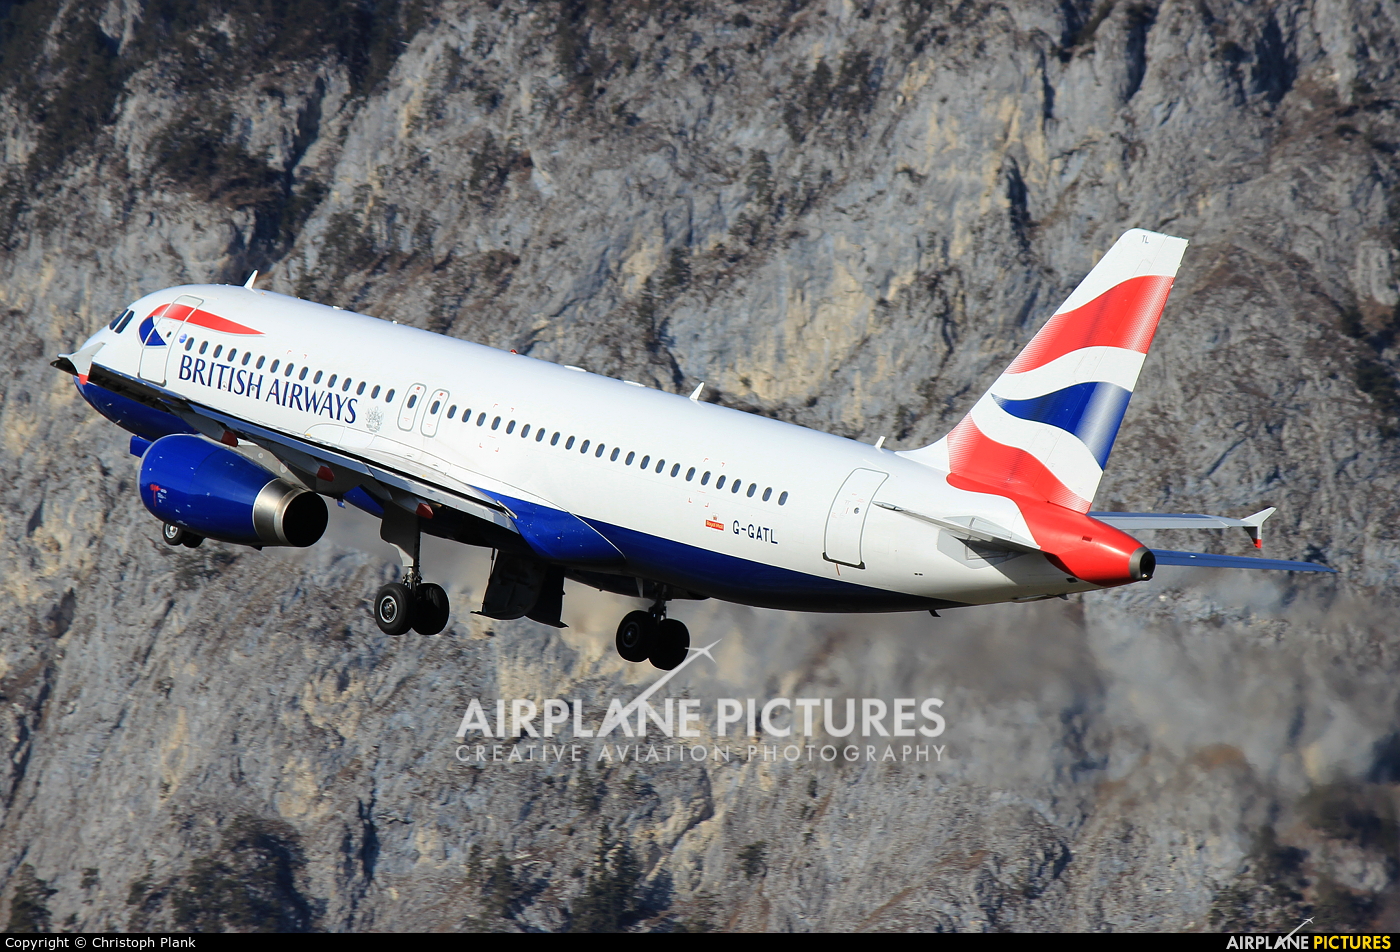 British Airways G-GATL aircraft at Innsbruck